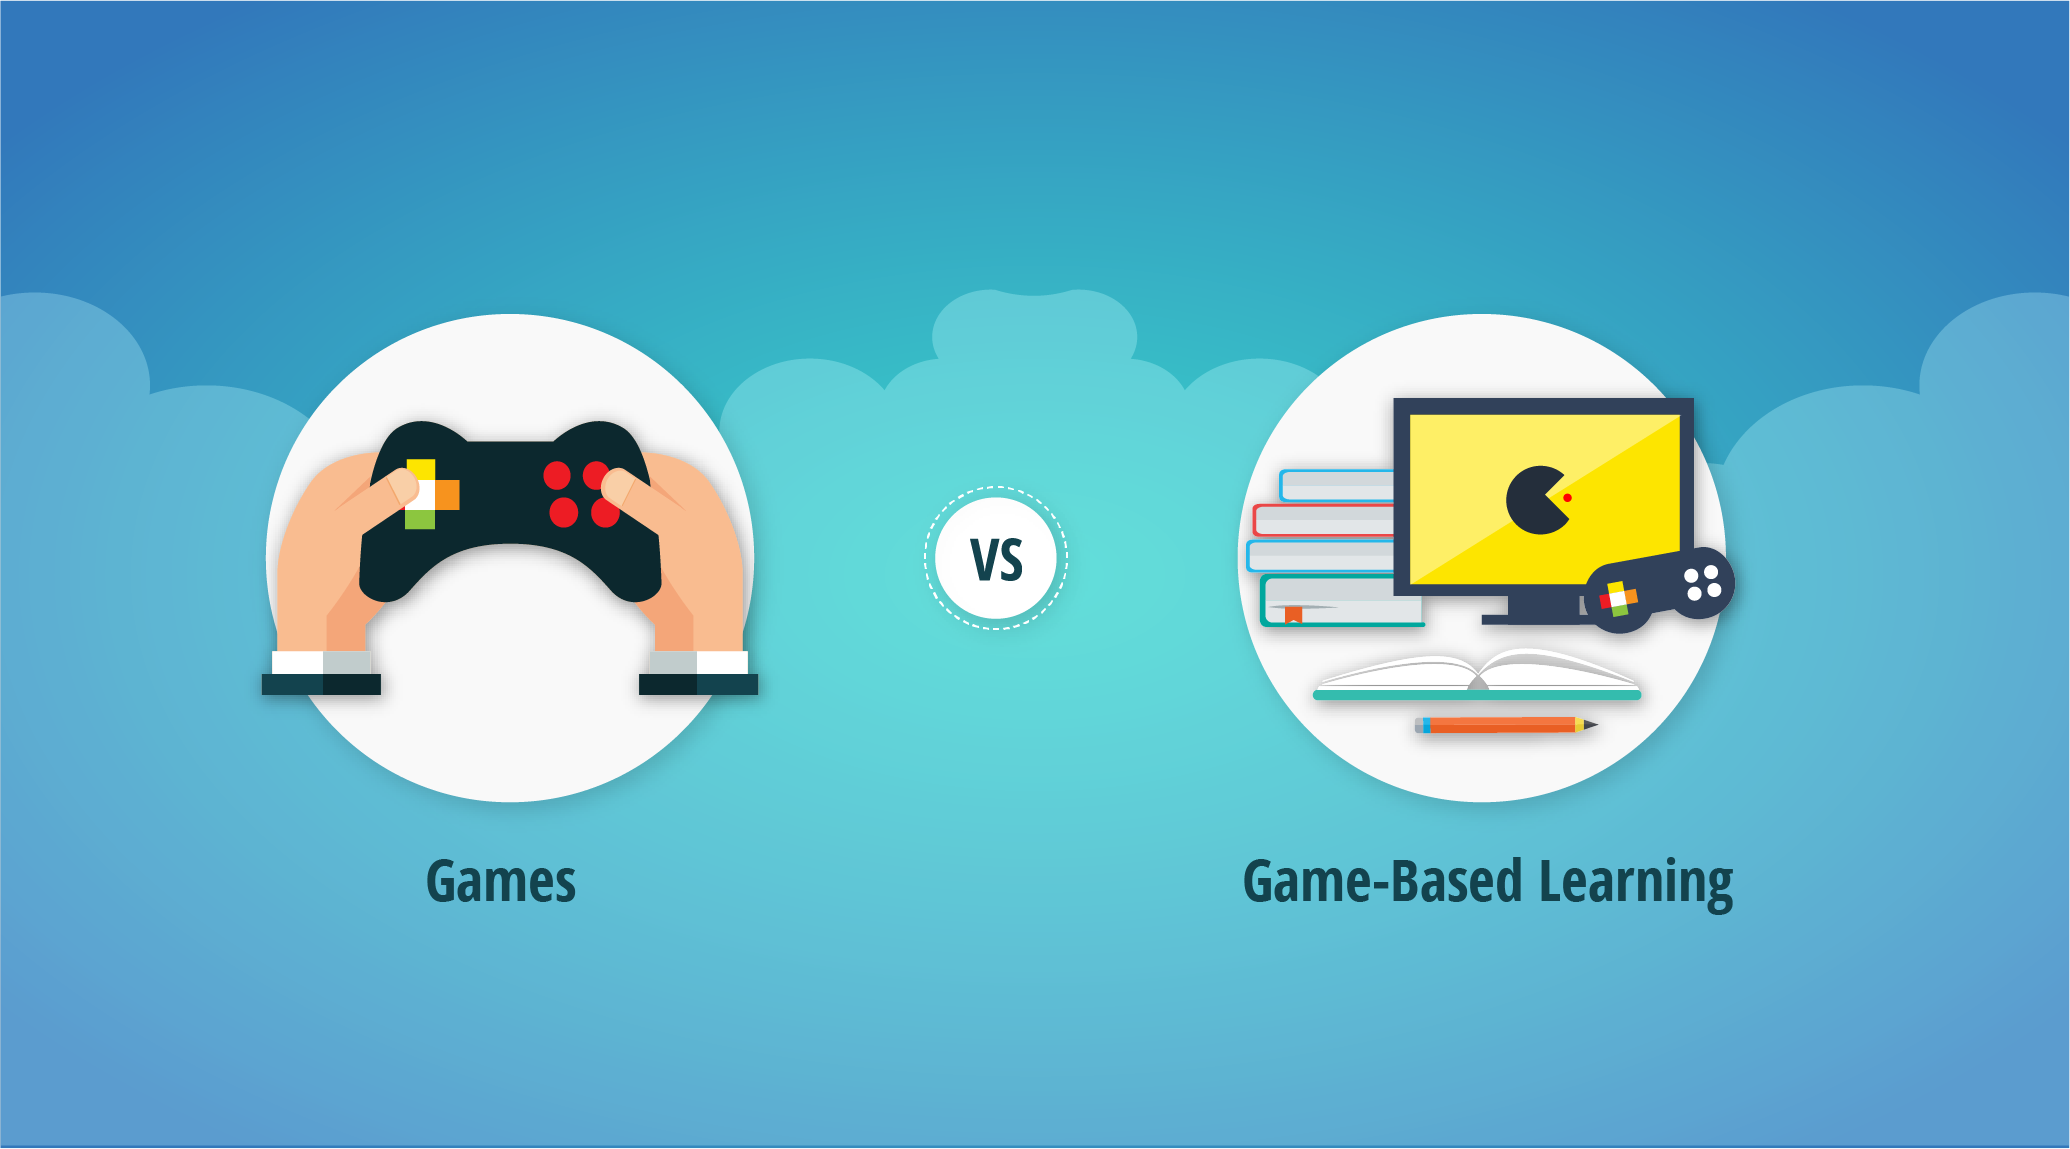 Games vs Game-Based Learning